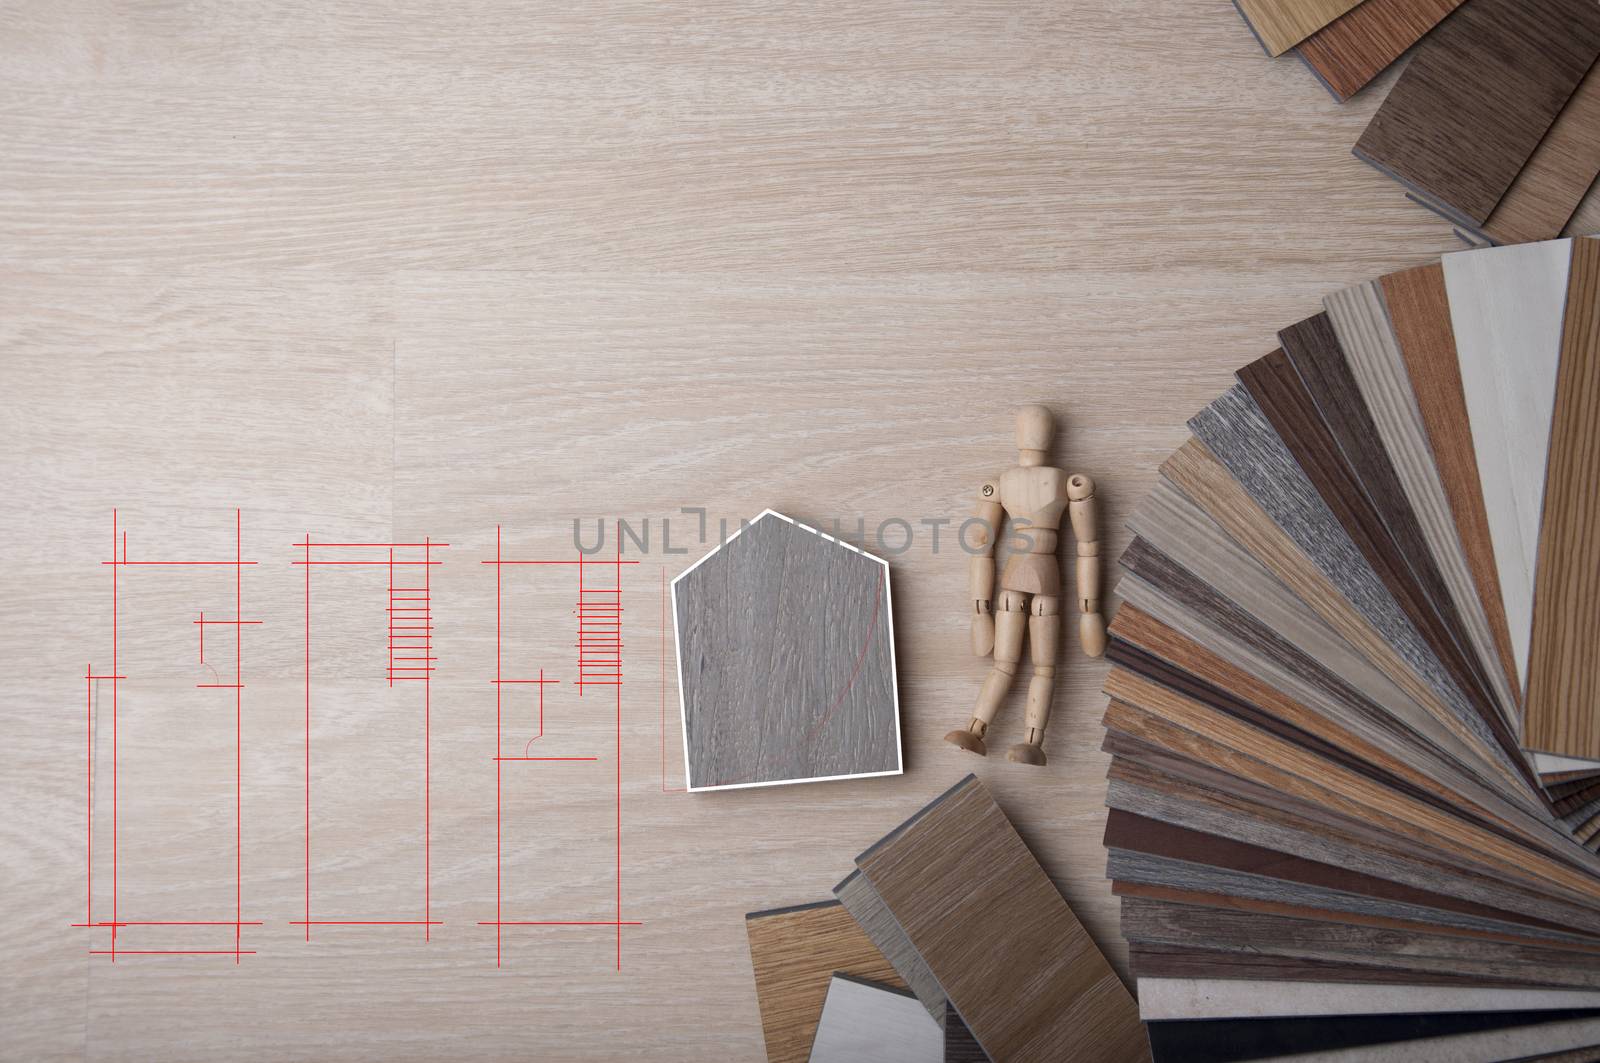 Wood matrials for interior design. Wooden samples for floor lami by Kingsman911